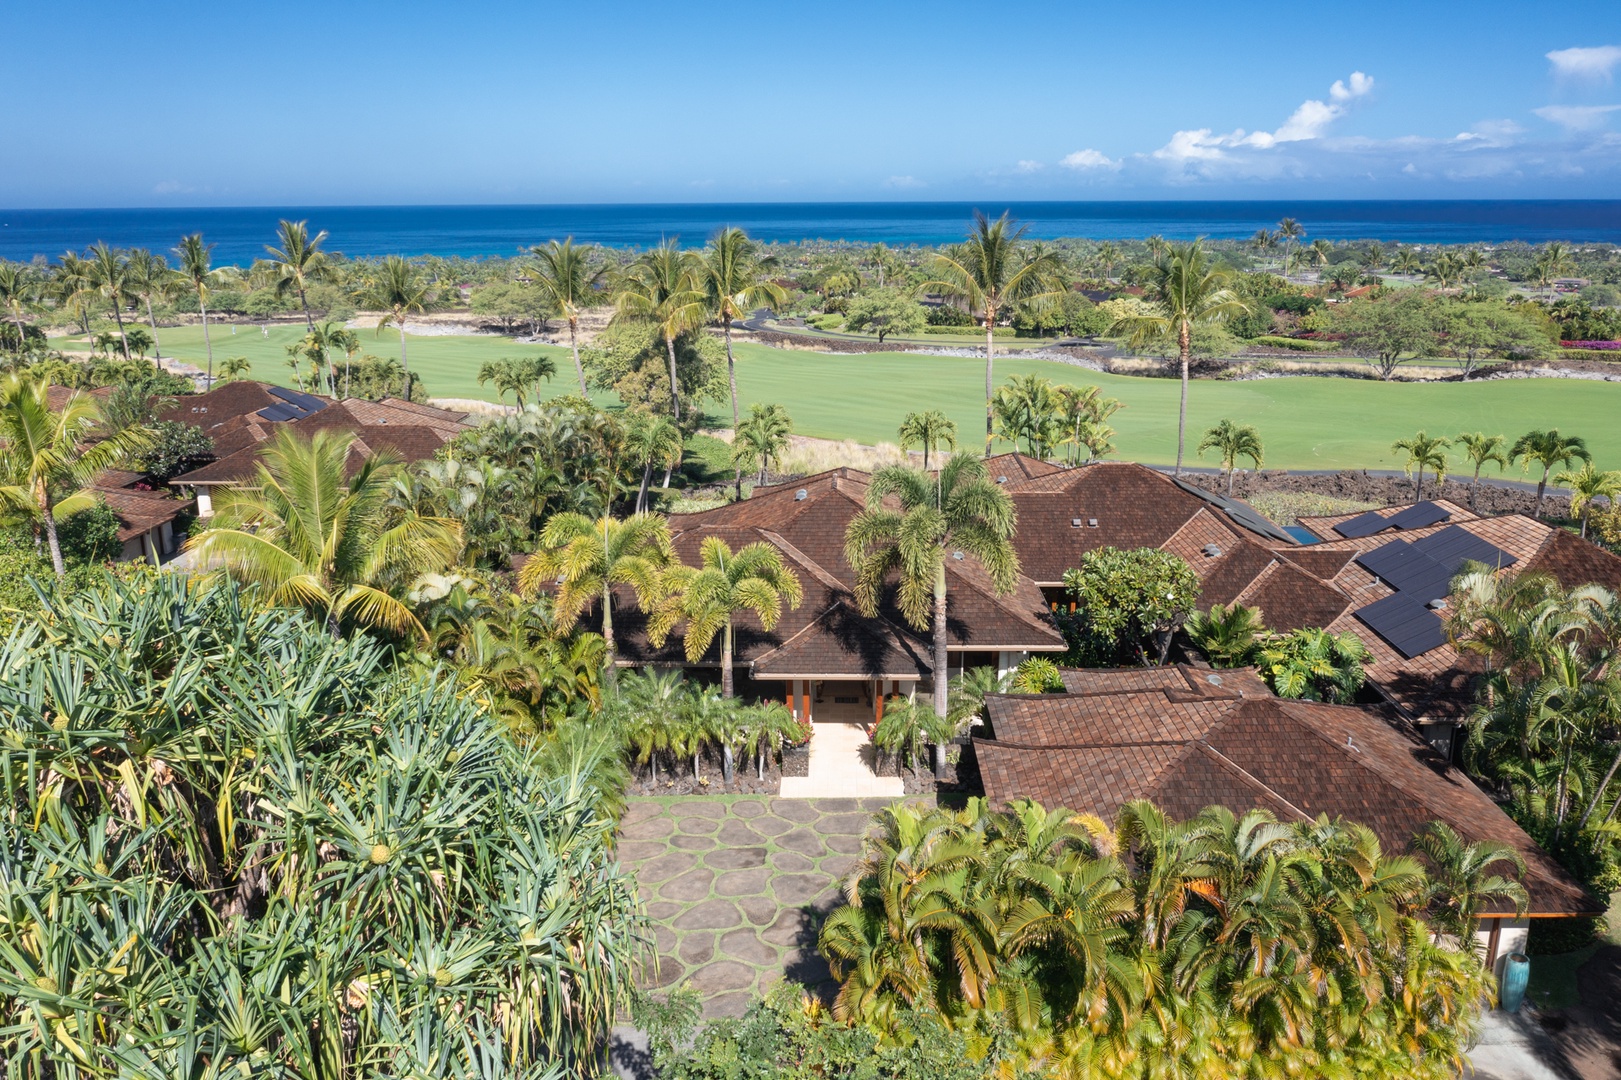 Kailua Kona Vacation Rentals, 4BD Hainoa Estate (102) at Four Seasons Resort at Hualalai - Aerial view of the 102 Hainoa Estate & its surroundings